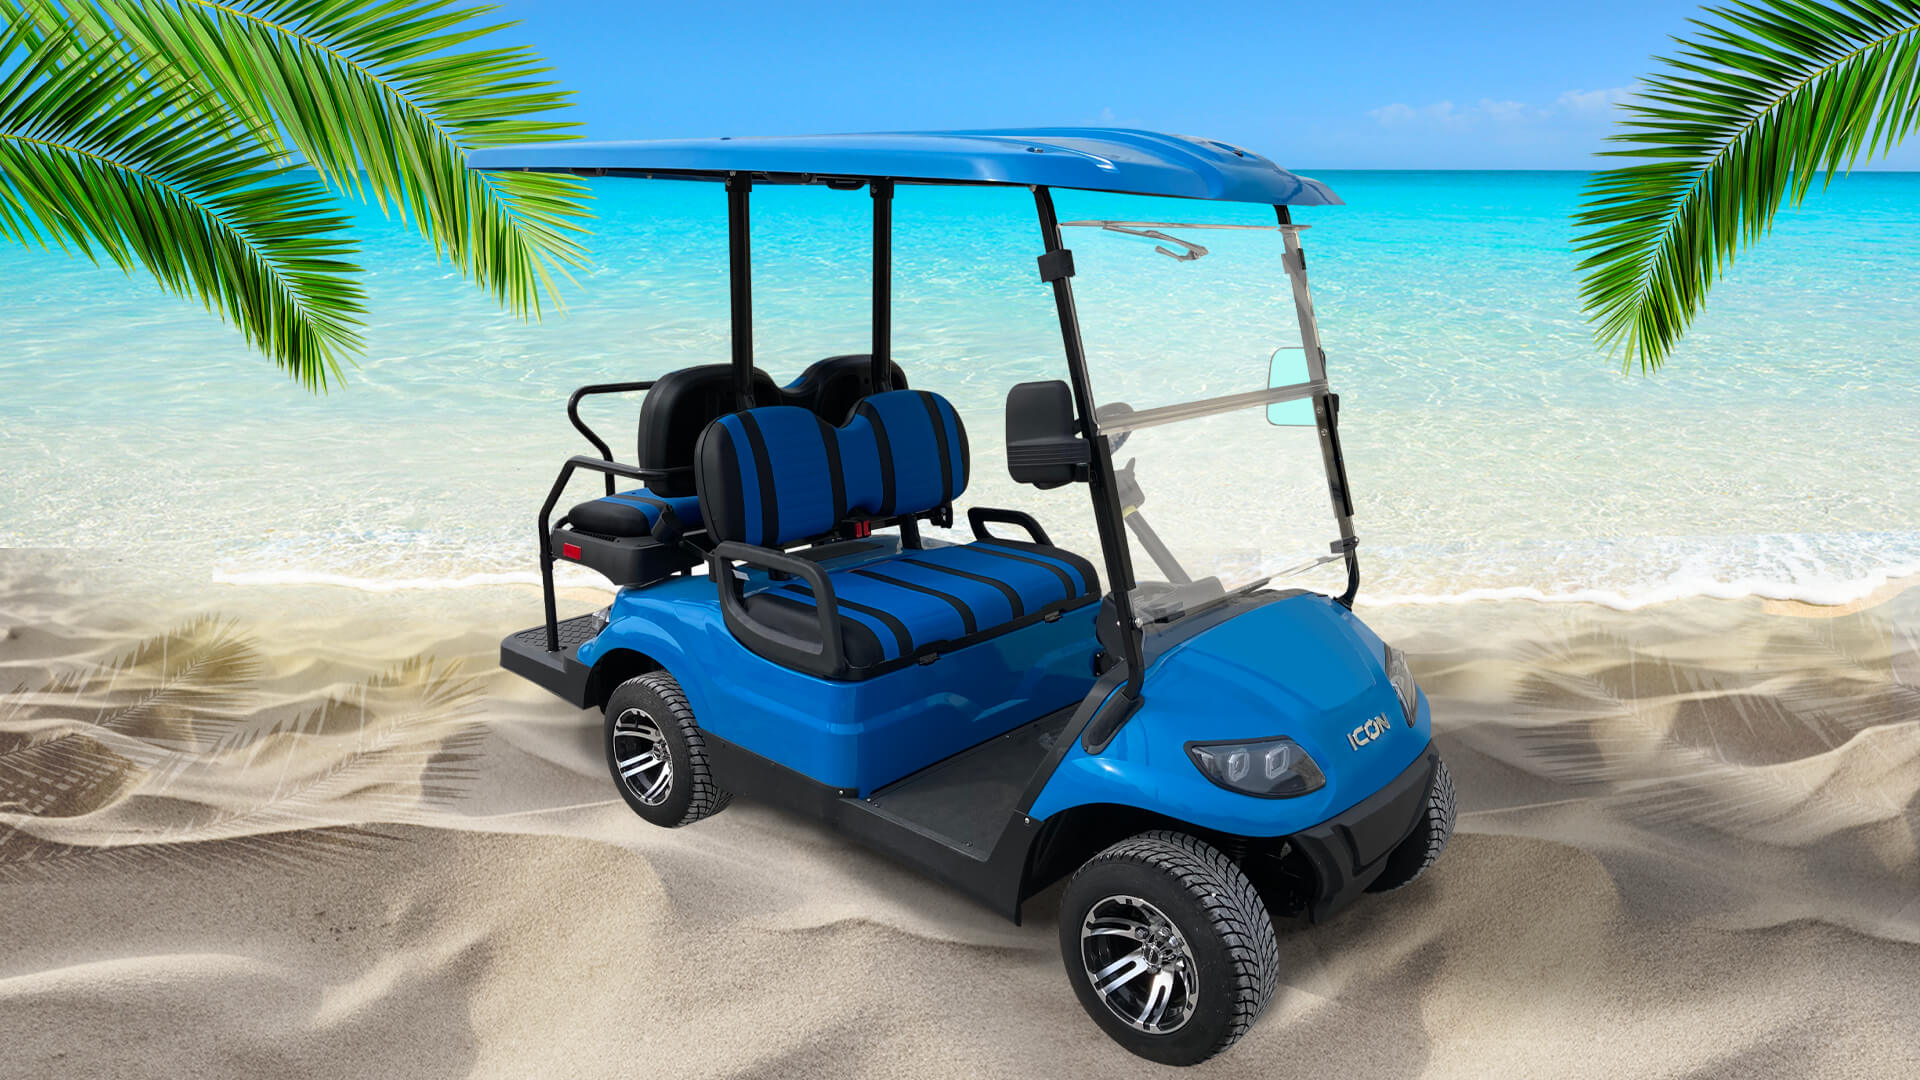 Fury Blue Golf Cart Rental at the beach